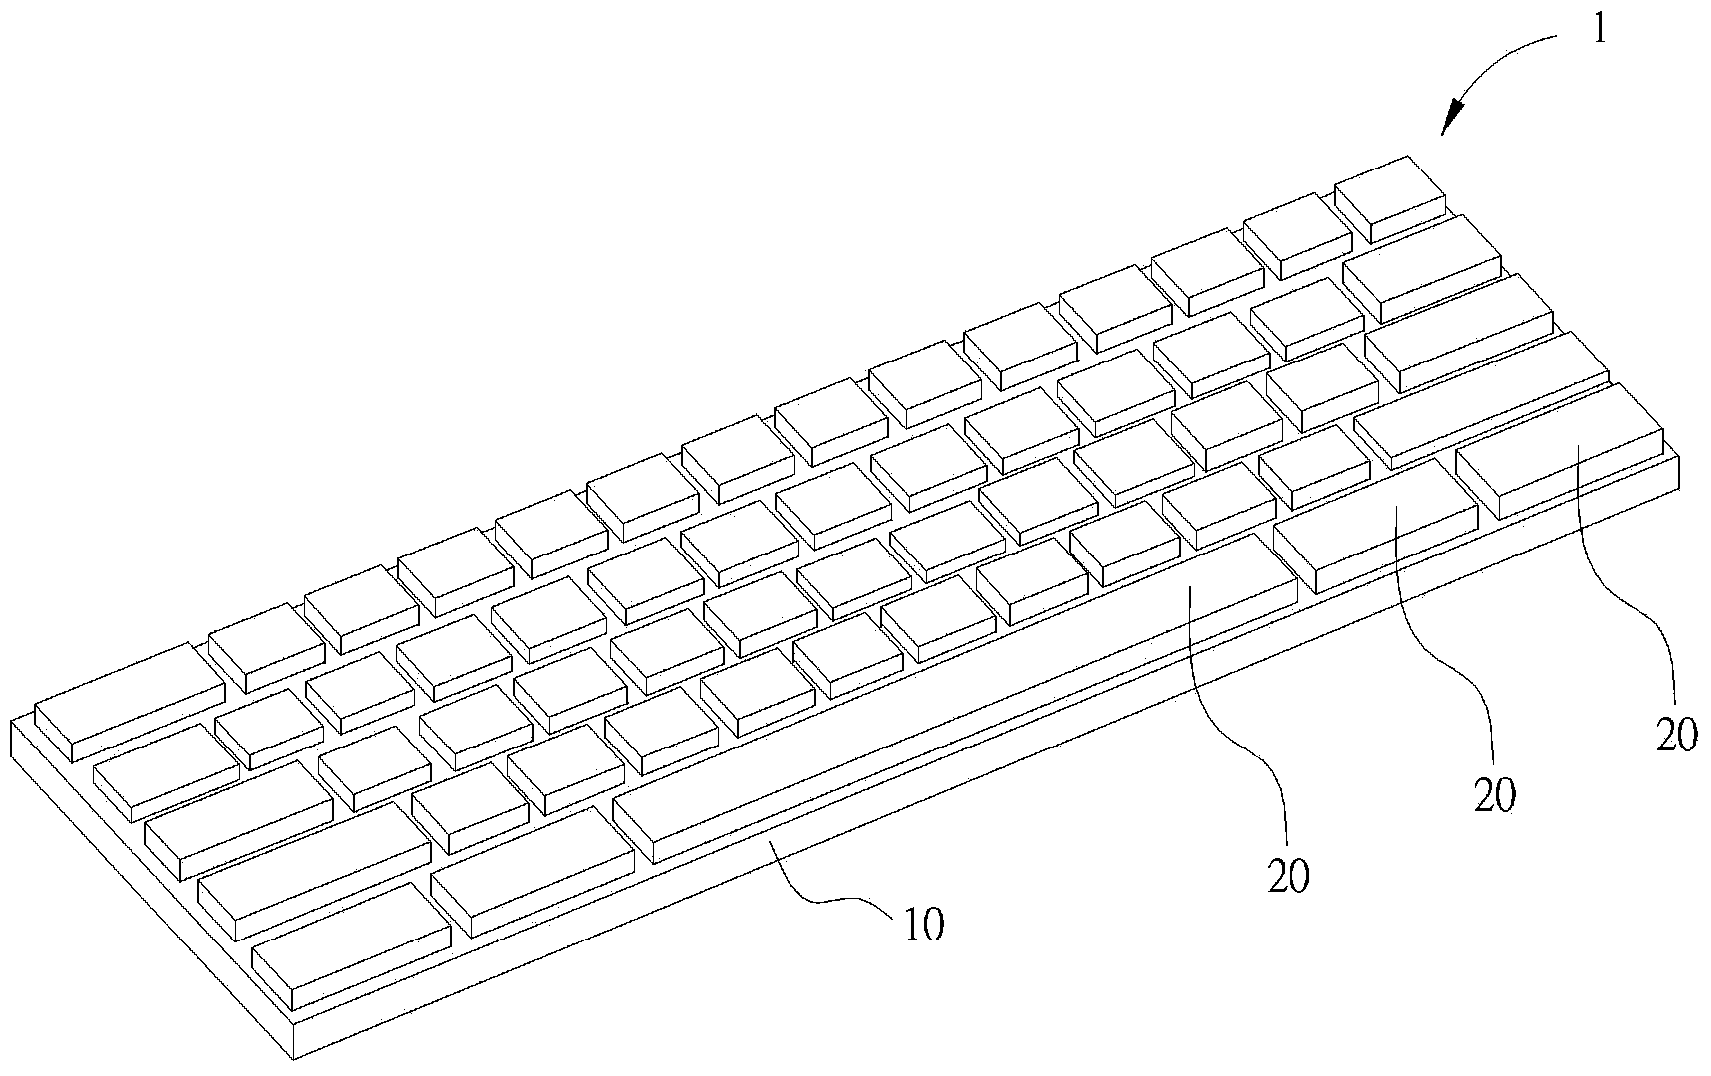 Key and keyboard